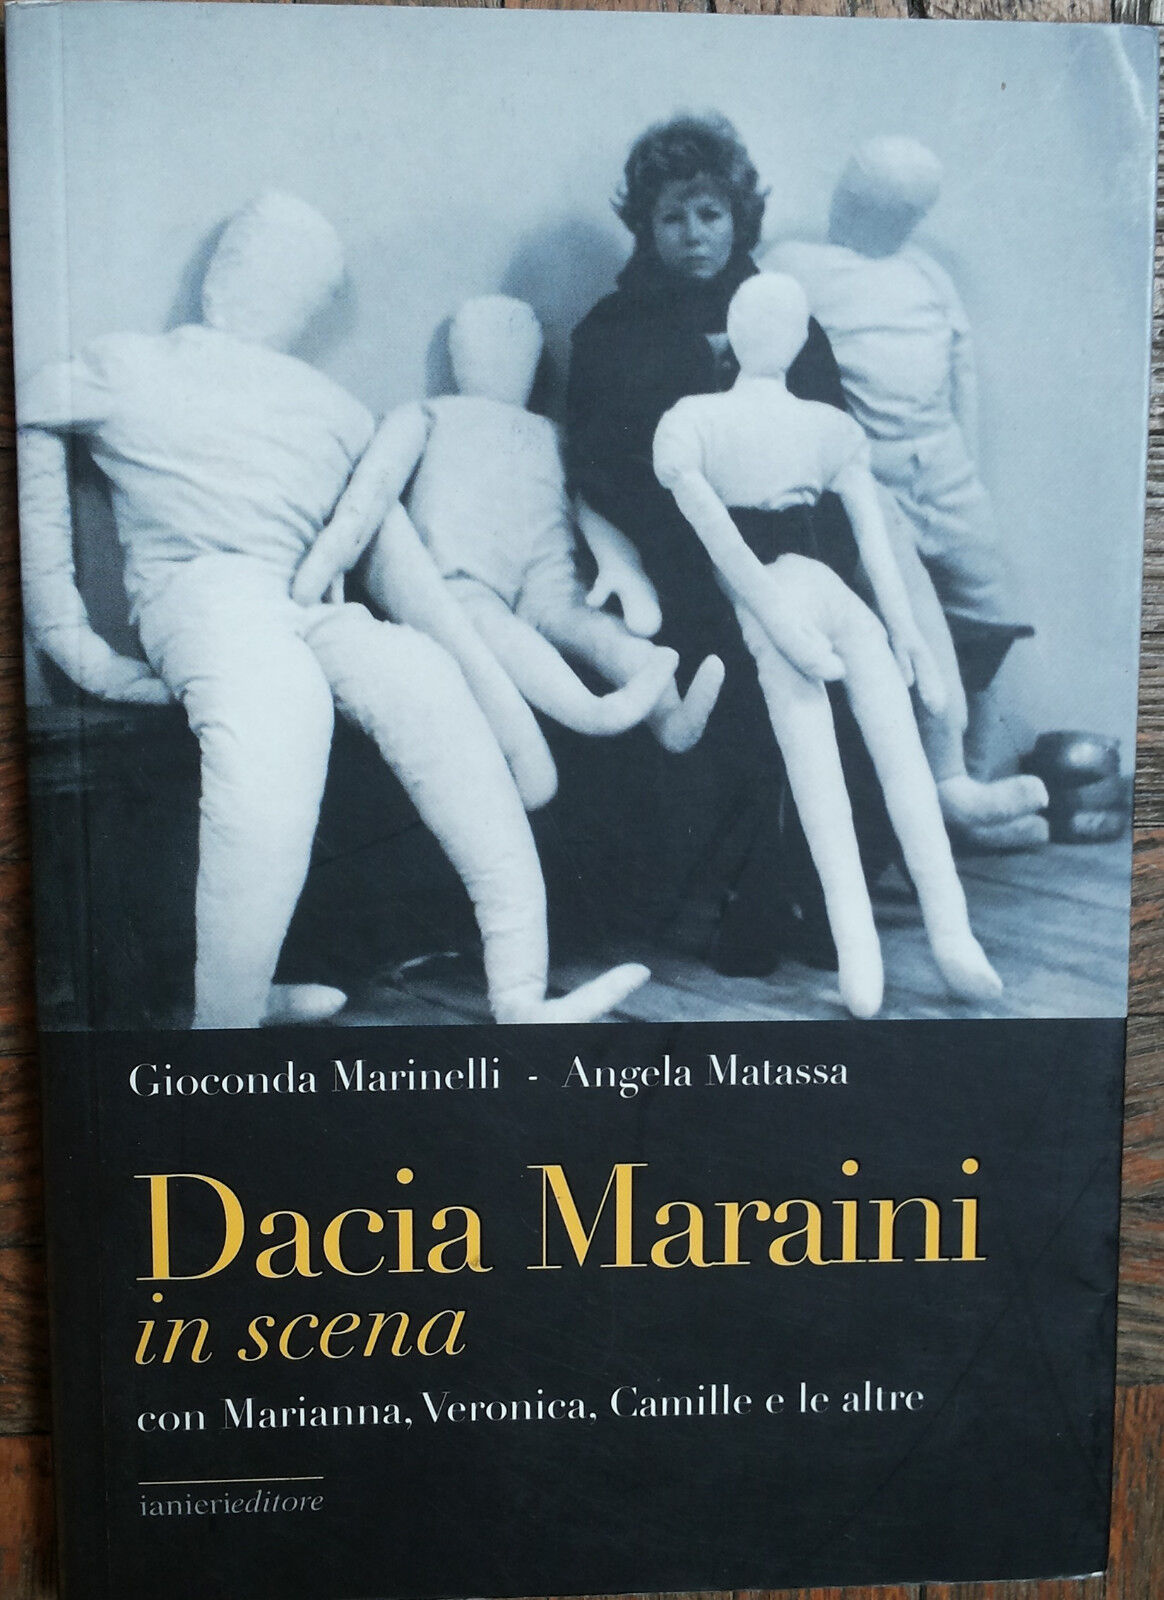 Dacia Maraini in scena -  Marinelli, Matassa - Ianieri editore,2008 - R